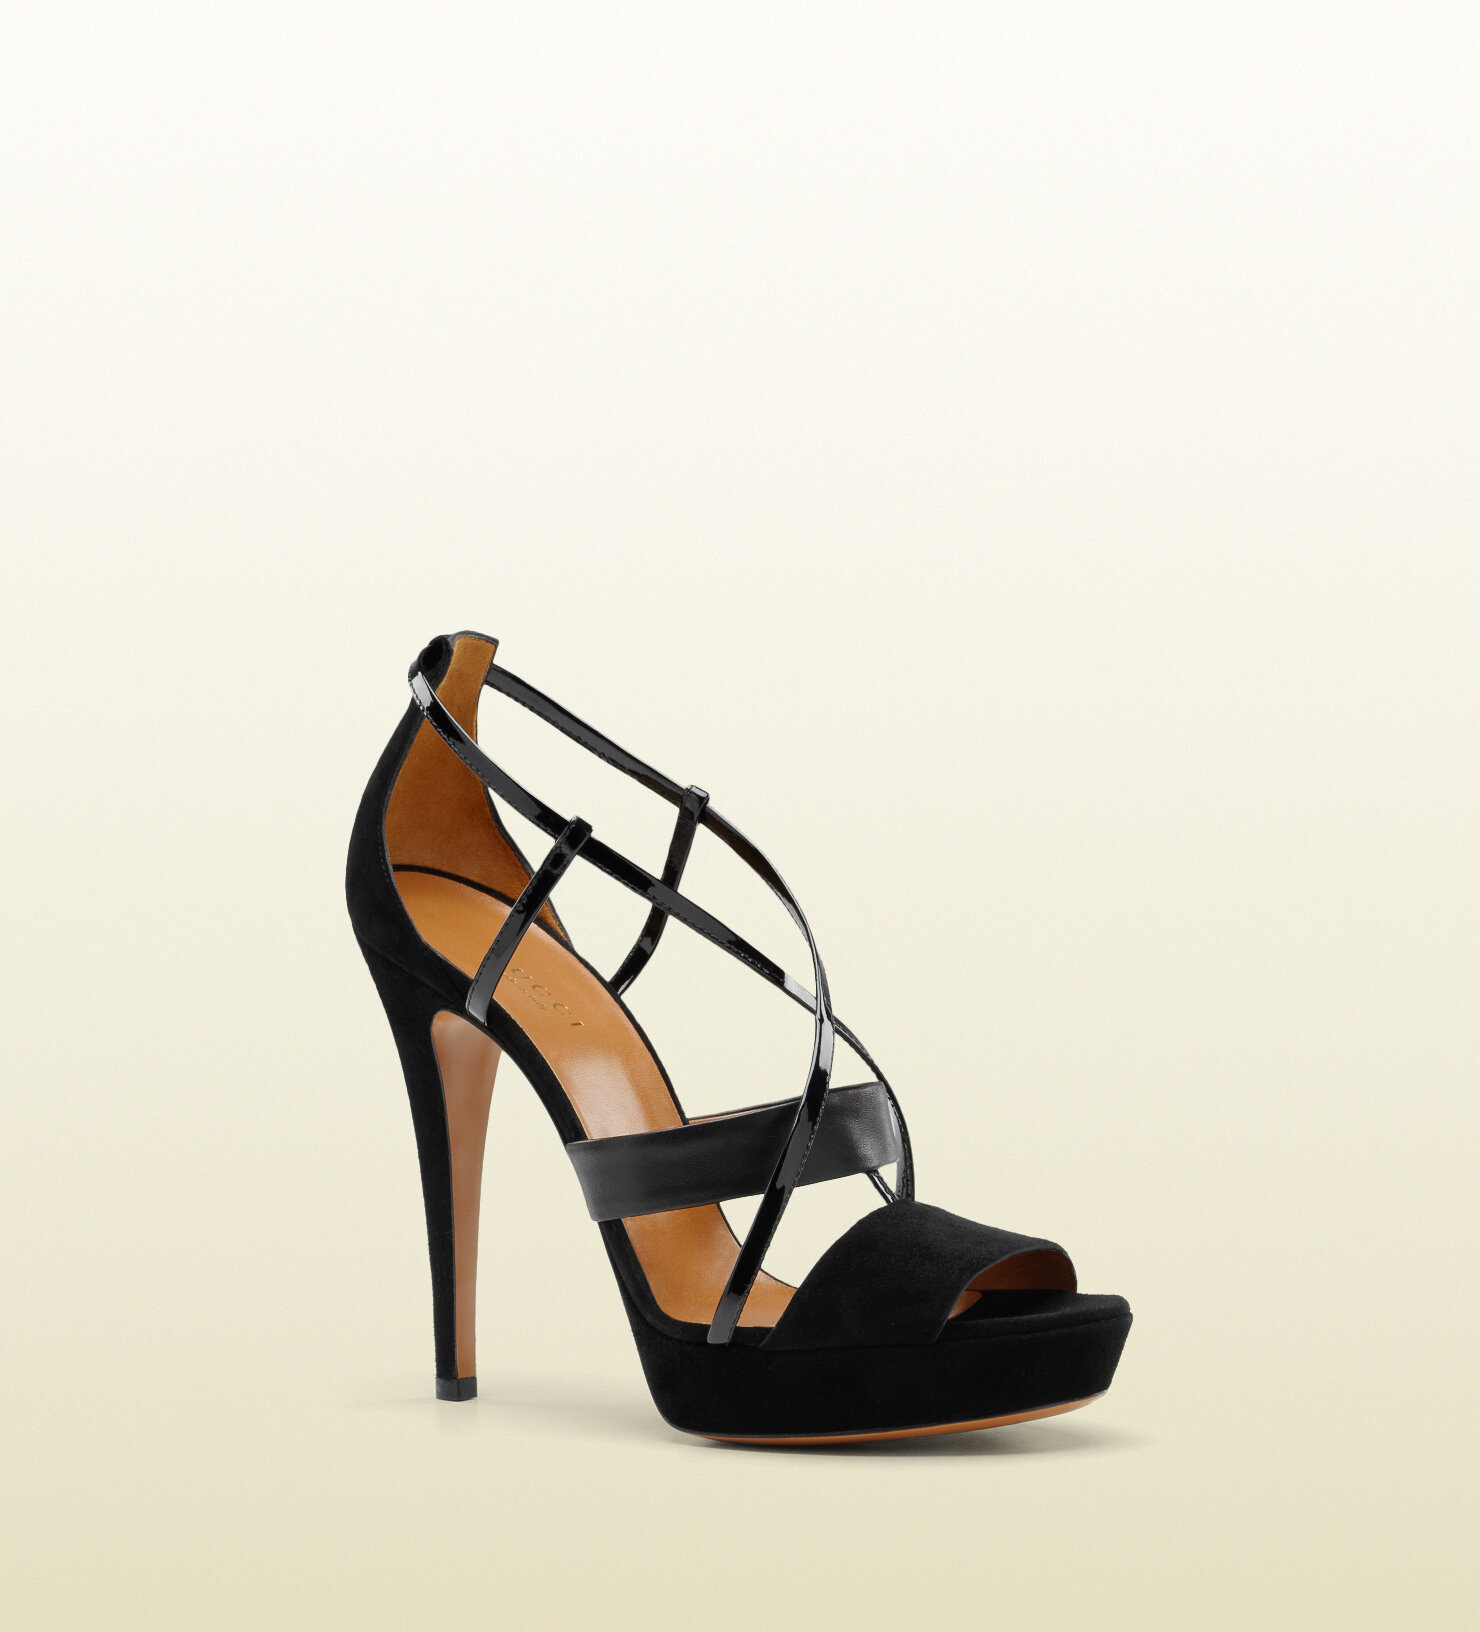 Gucci Betty High Heel Platform Sandals in Black.jpg